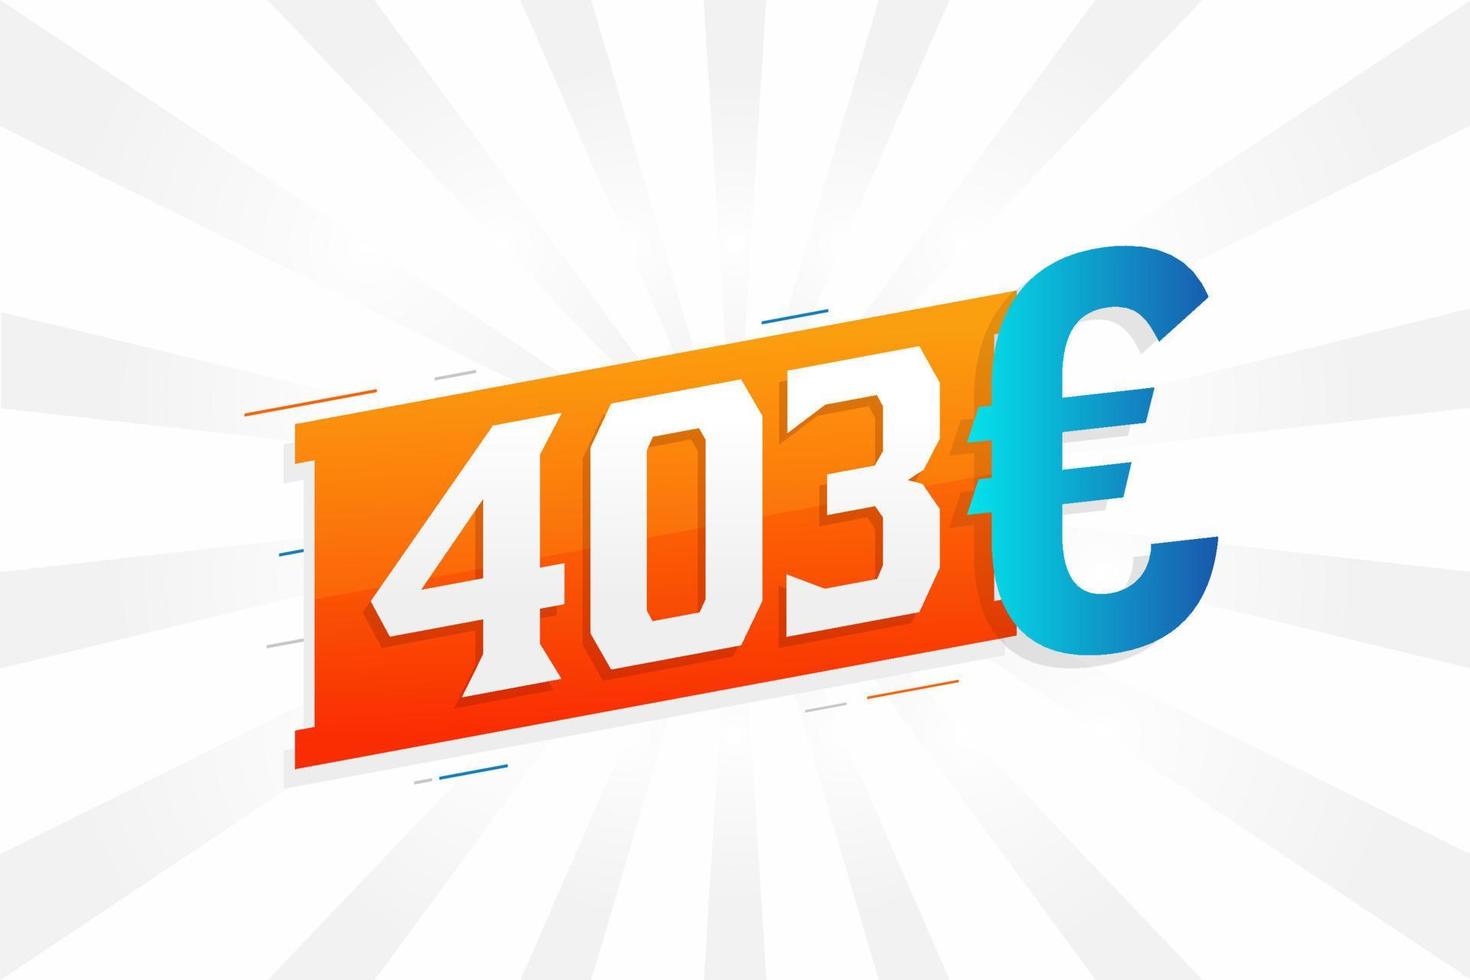 Símbolo de texto vectorial de moneda de 403 euros. 403 euro vector de stock de dinero de la unión europea